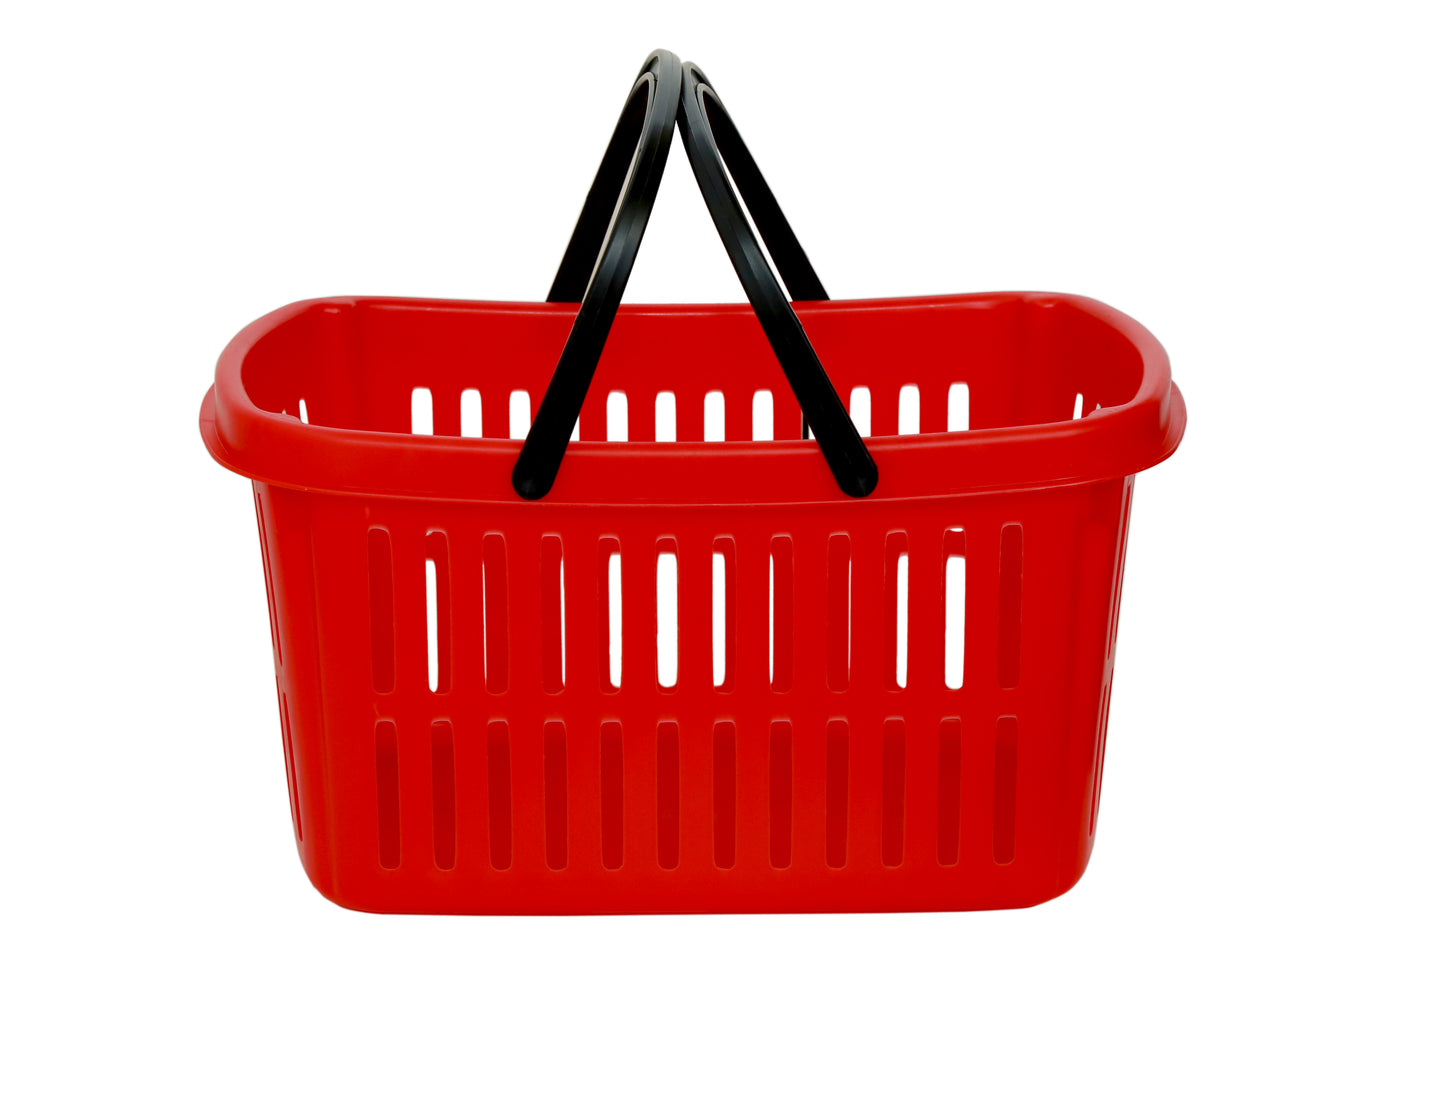 MODEL MT-2042 Shopping Hand Basket Cart